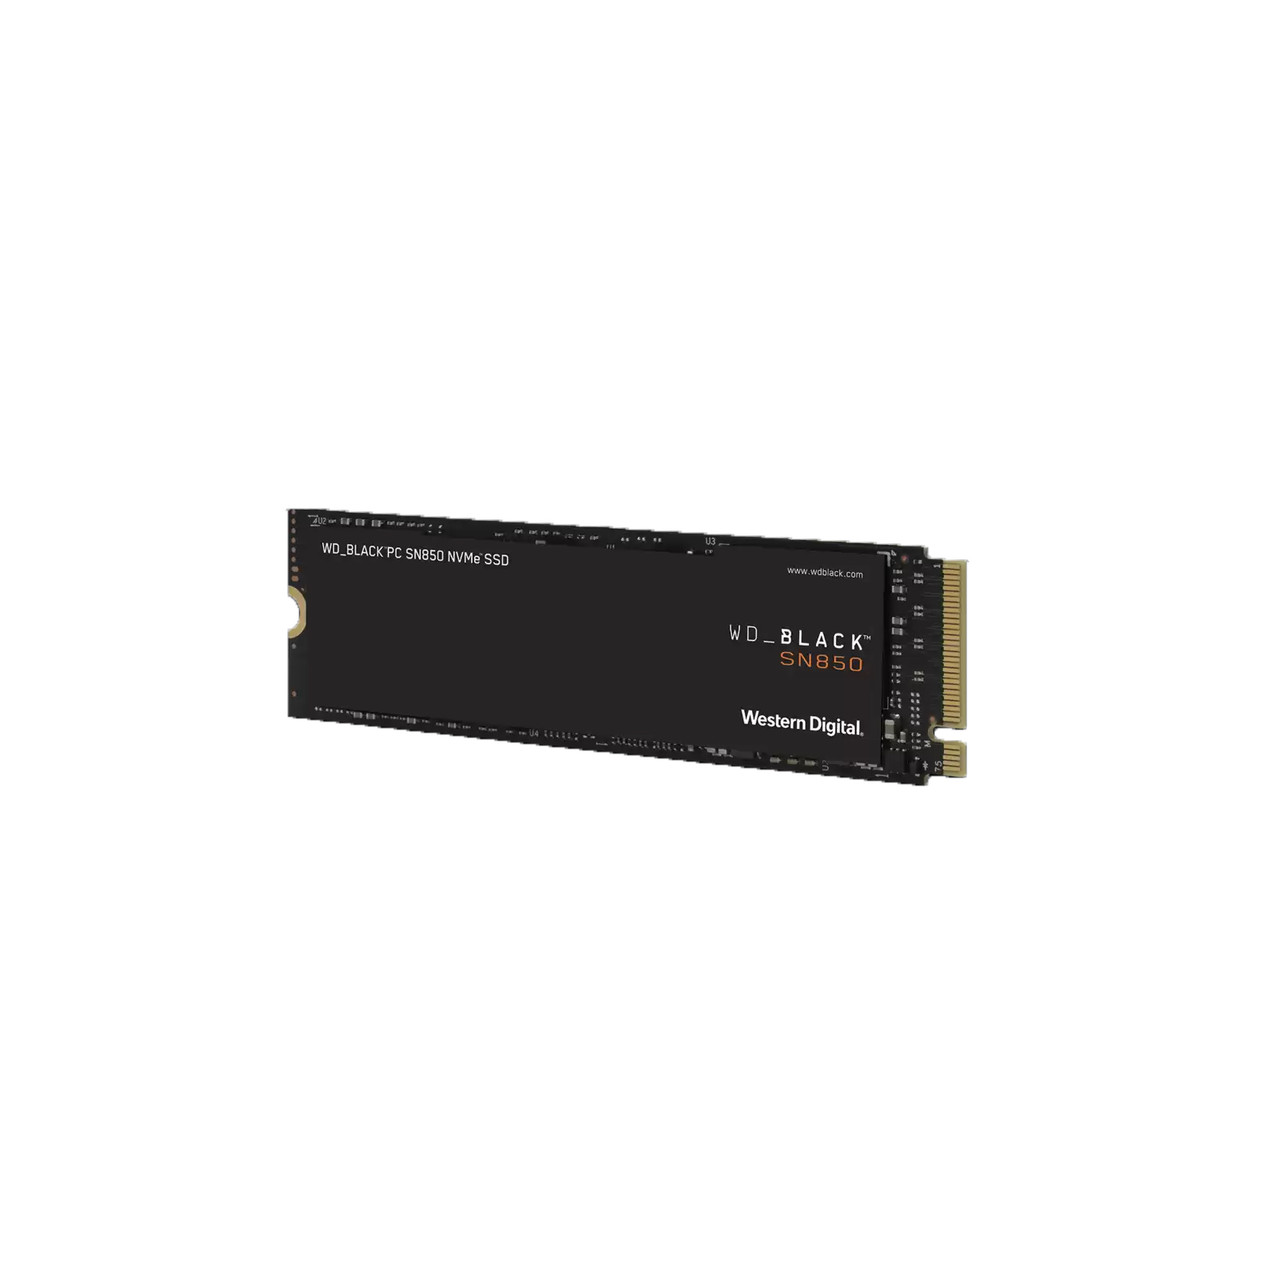 WD BLACK 1TB SN850 NVMe Internal Gaming SSD Solid State Drive -Gen4 PCIe, M.2 2280,3D NAND, Up to 7,000 MB/s  WDS100T1X0E